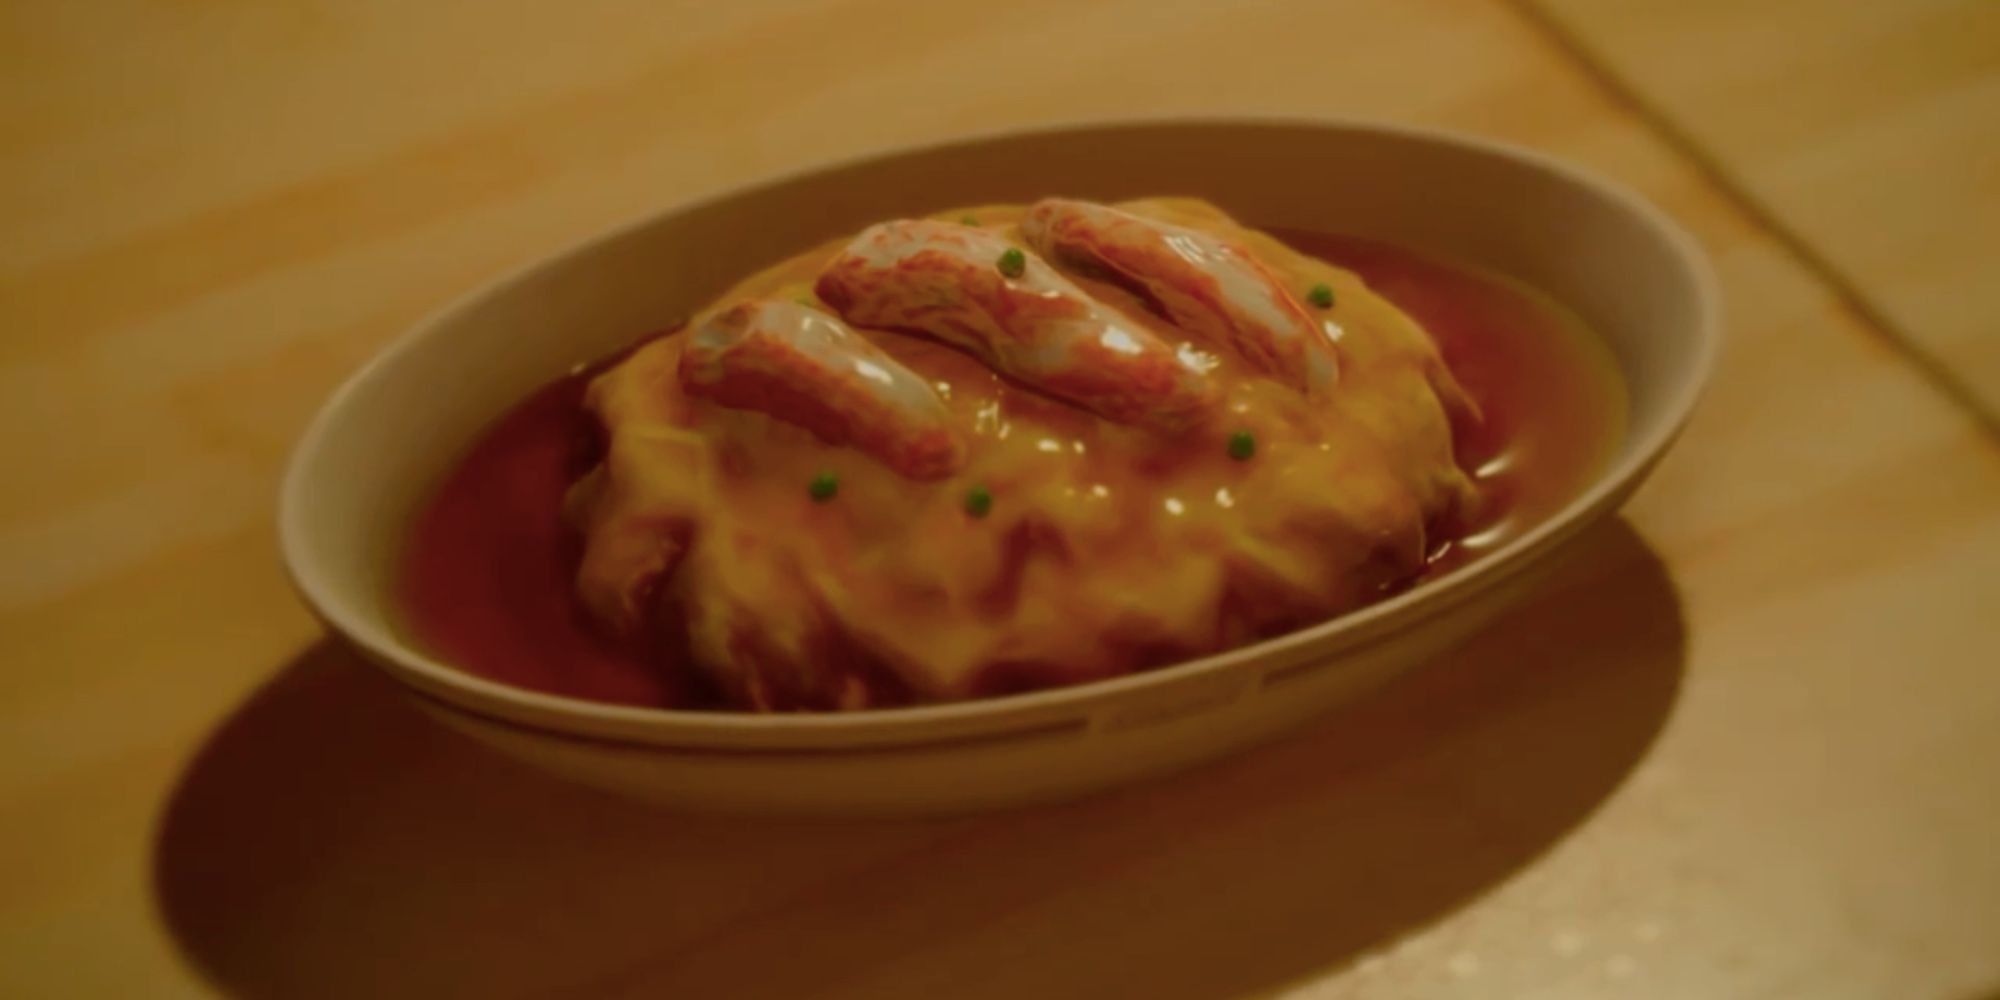 creamy crustacean omelette from final fantasy 15